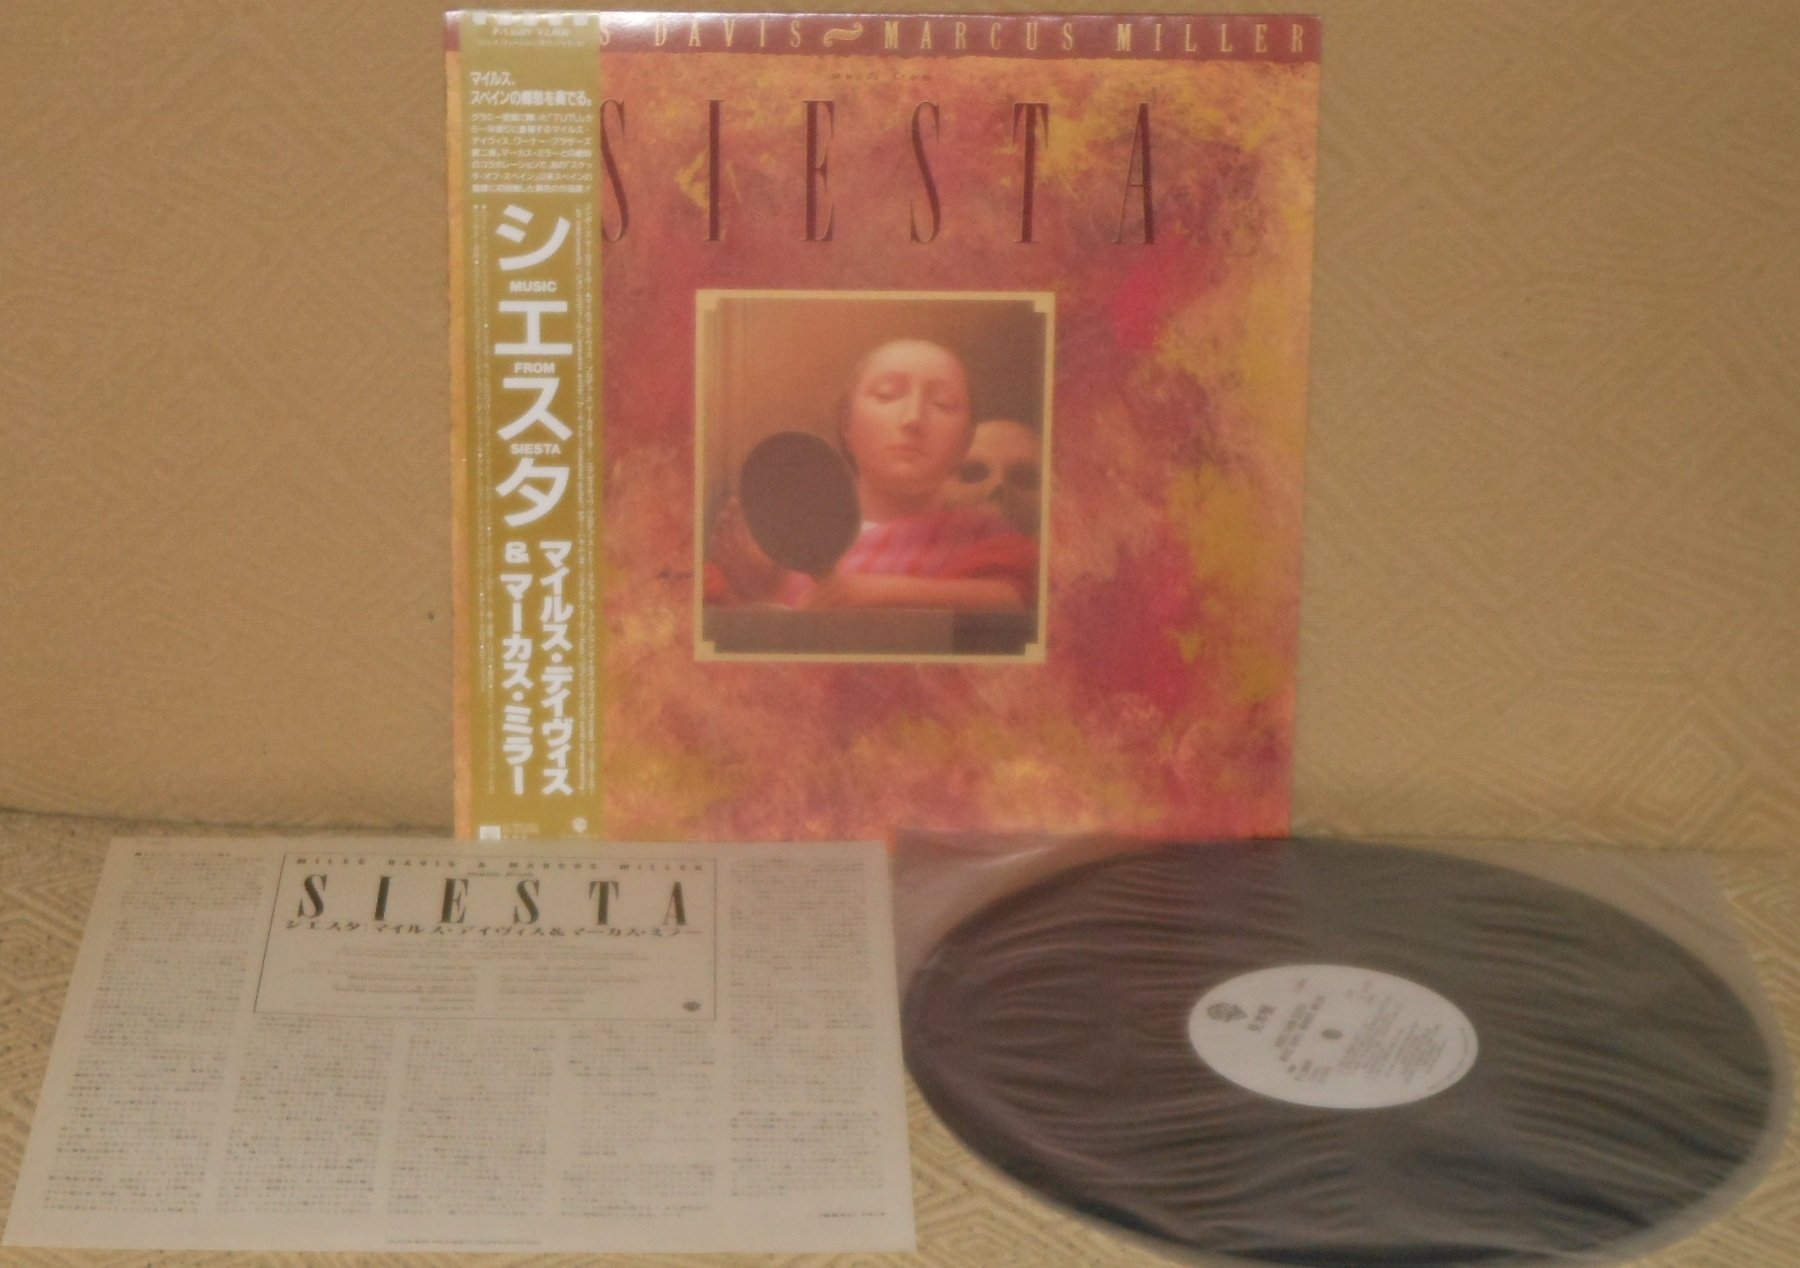 MILES DAVIS MARCUS MILLER – MUSIC FOR SIESTA – WB P-13609 1987 – LP JAPAN OBI NM…